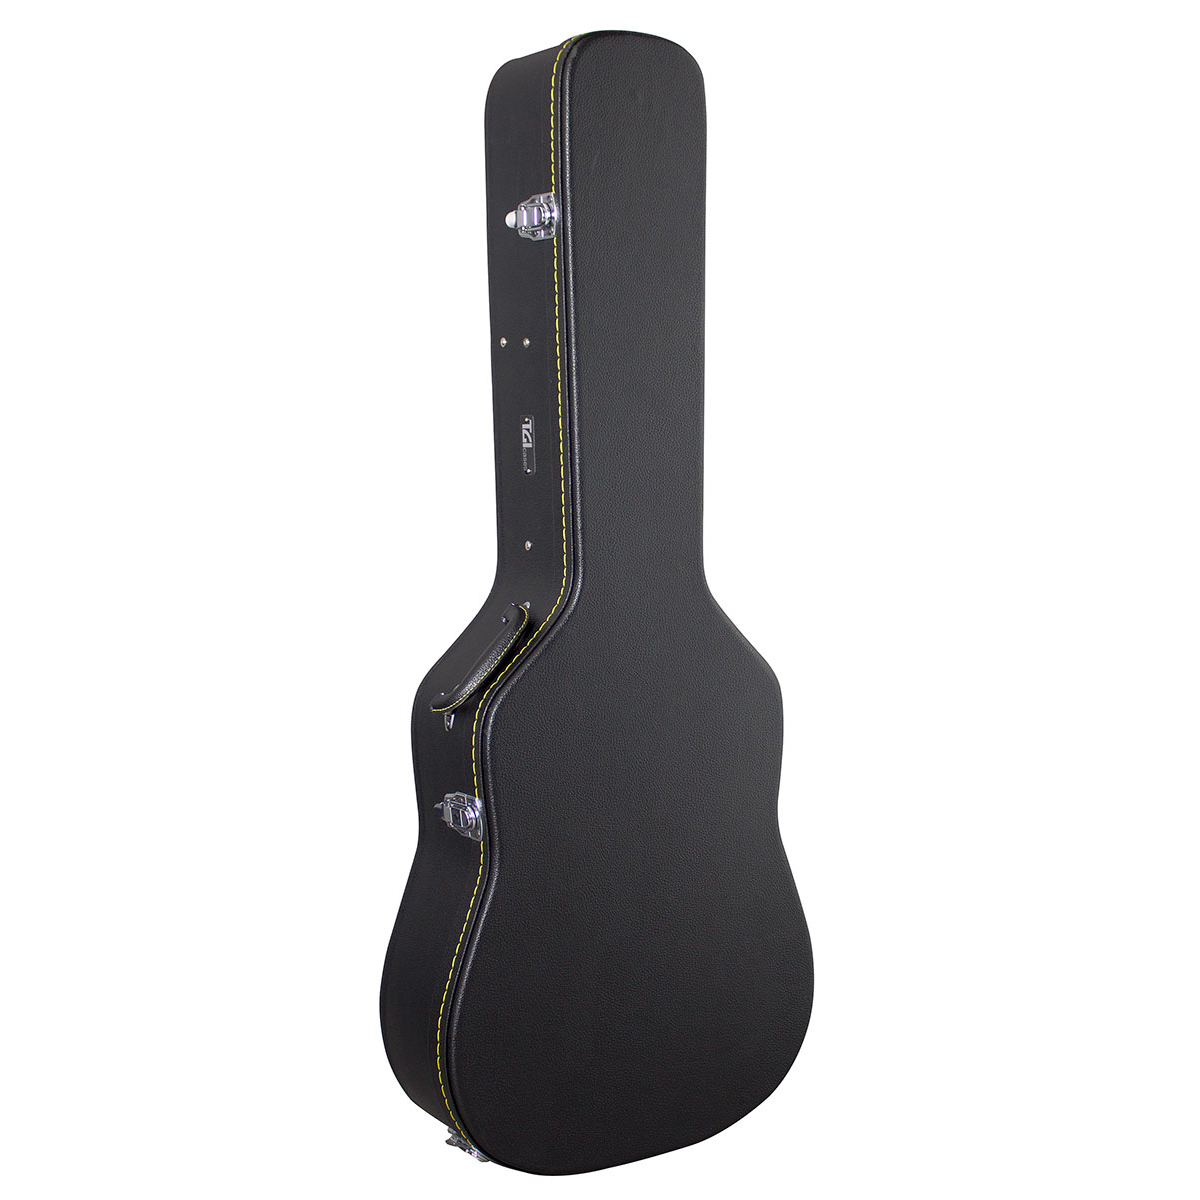 TGI Case Wood Acoustic Guitar 6 & 12 String